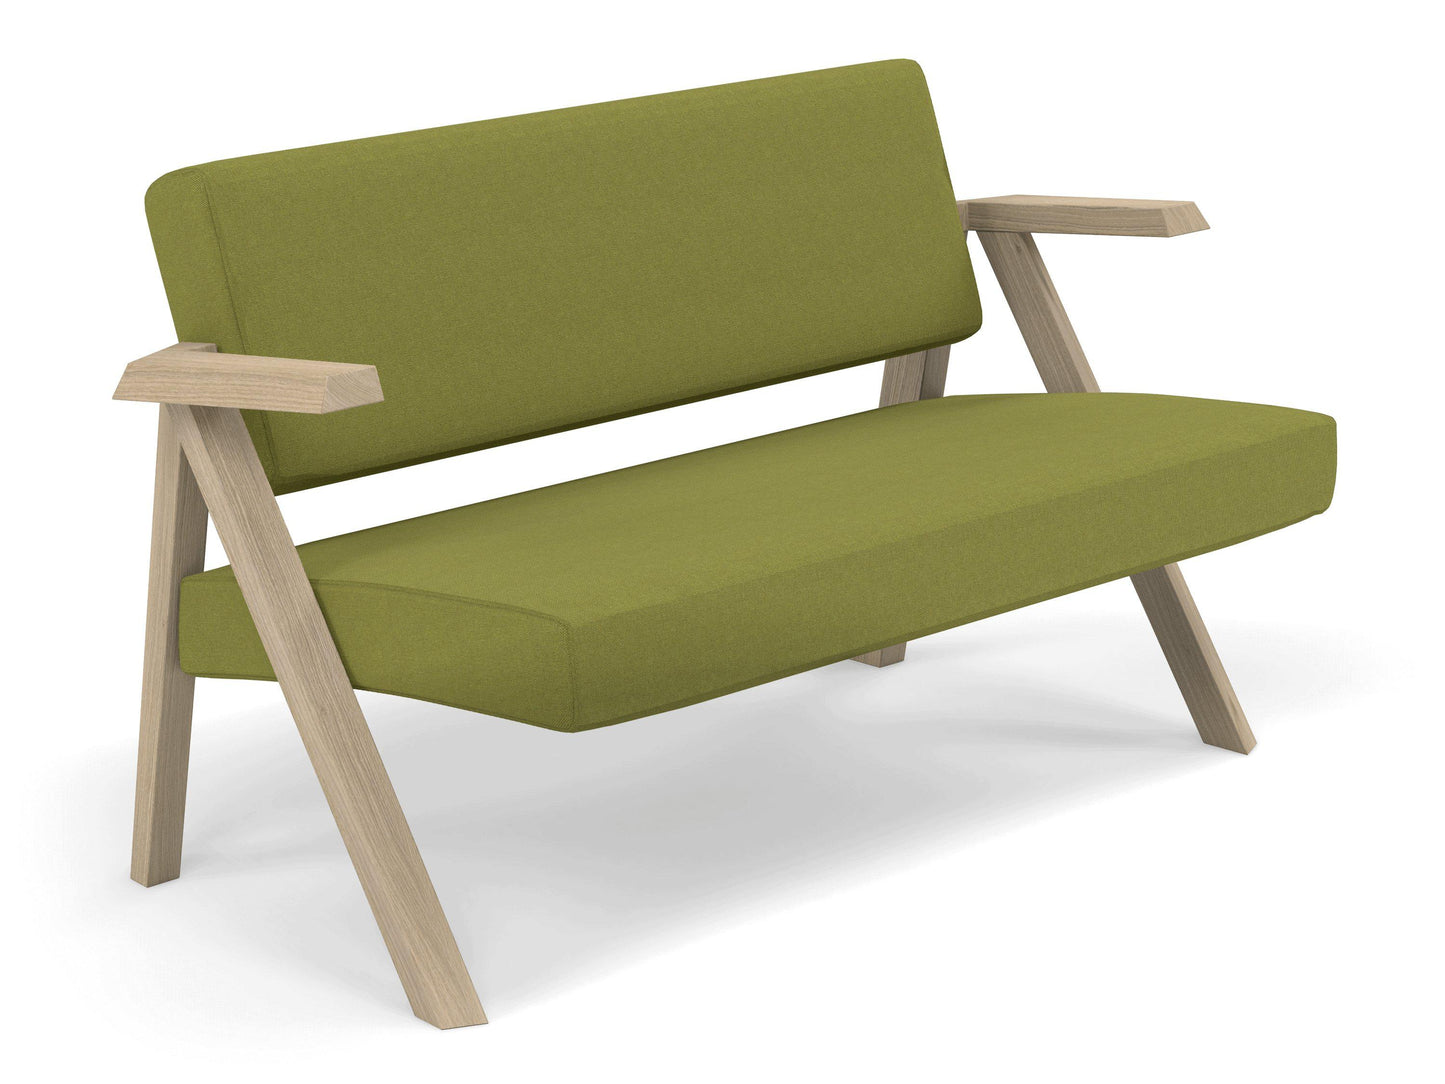 Classic Mid-century Design 2 Seater Sofa Armchair in Lime Green Fabric-Distinct Designs (London) Ltd